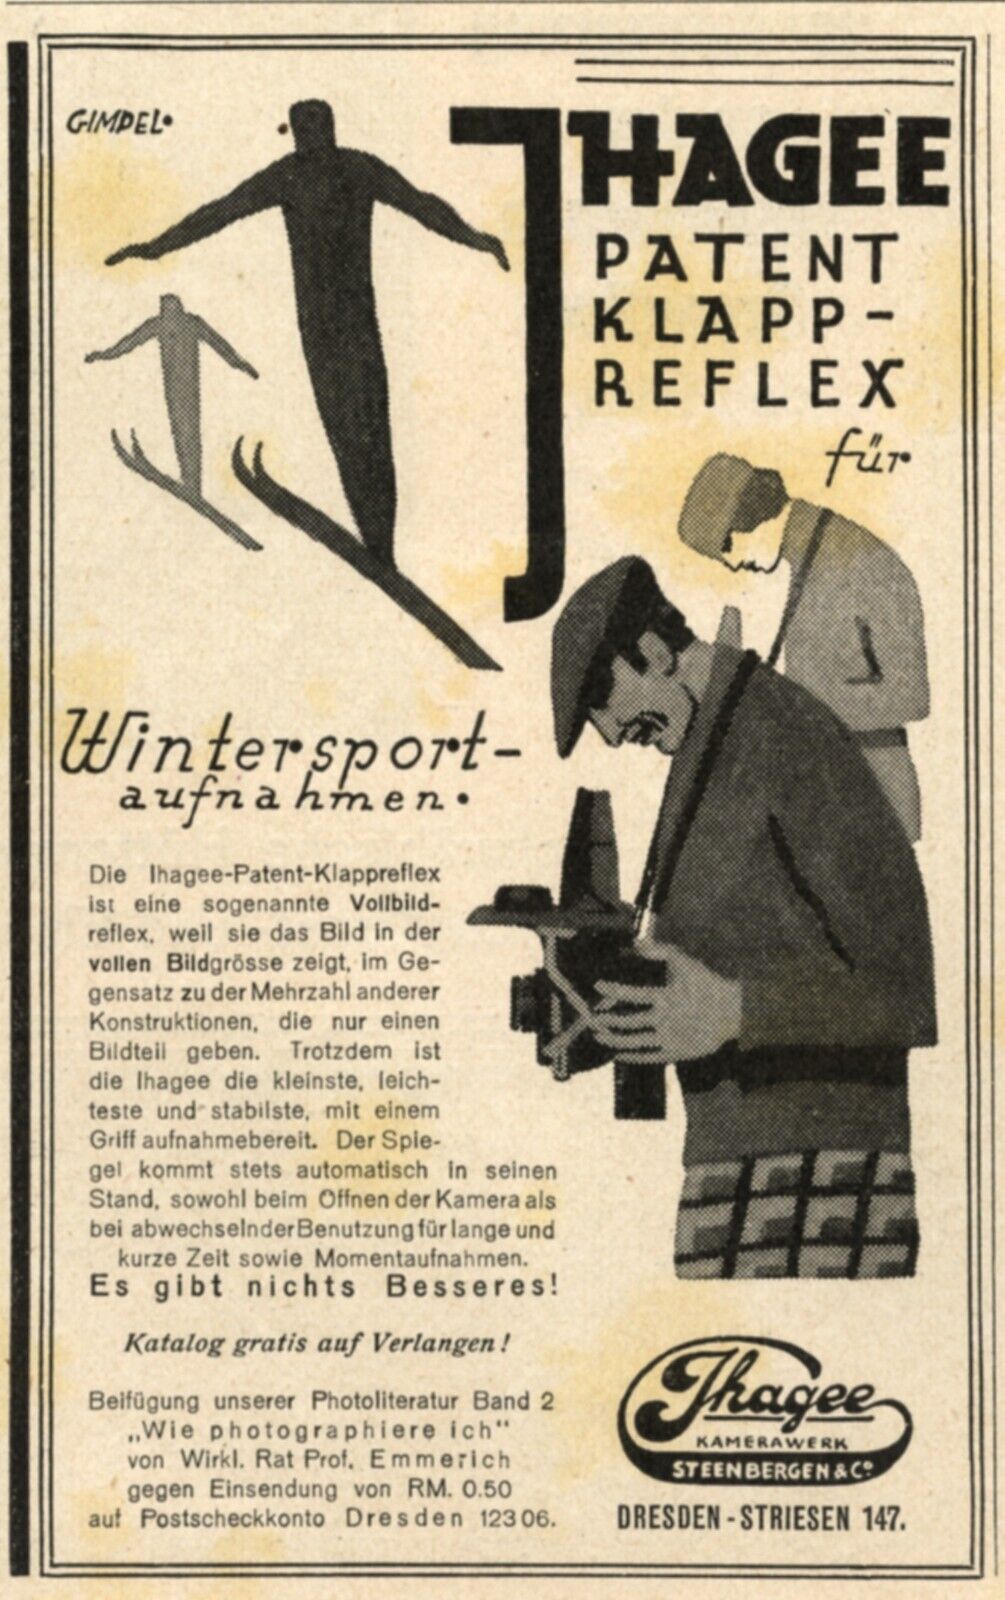 Ihagee camera Dresden 1928 ad patent folding reflex advertising by Gimpel